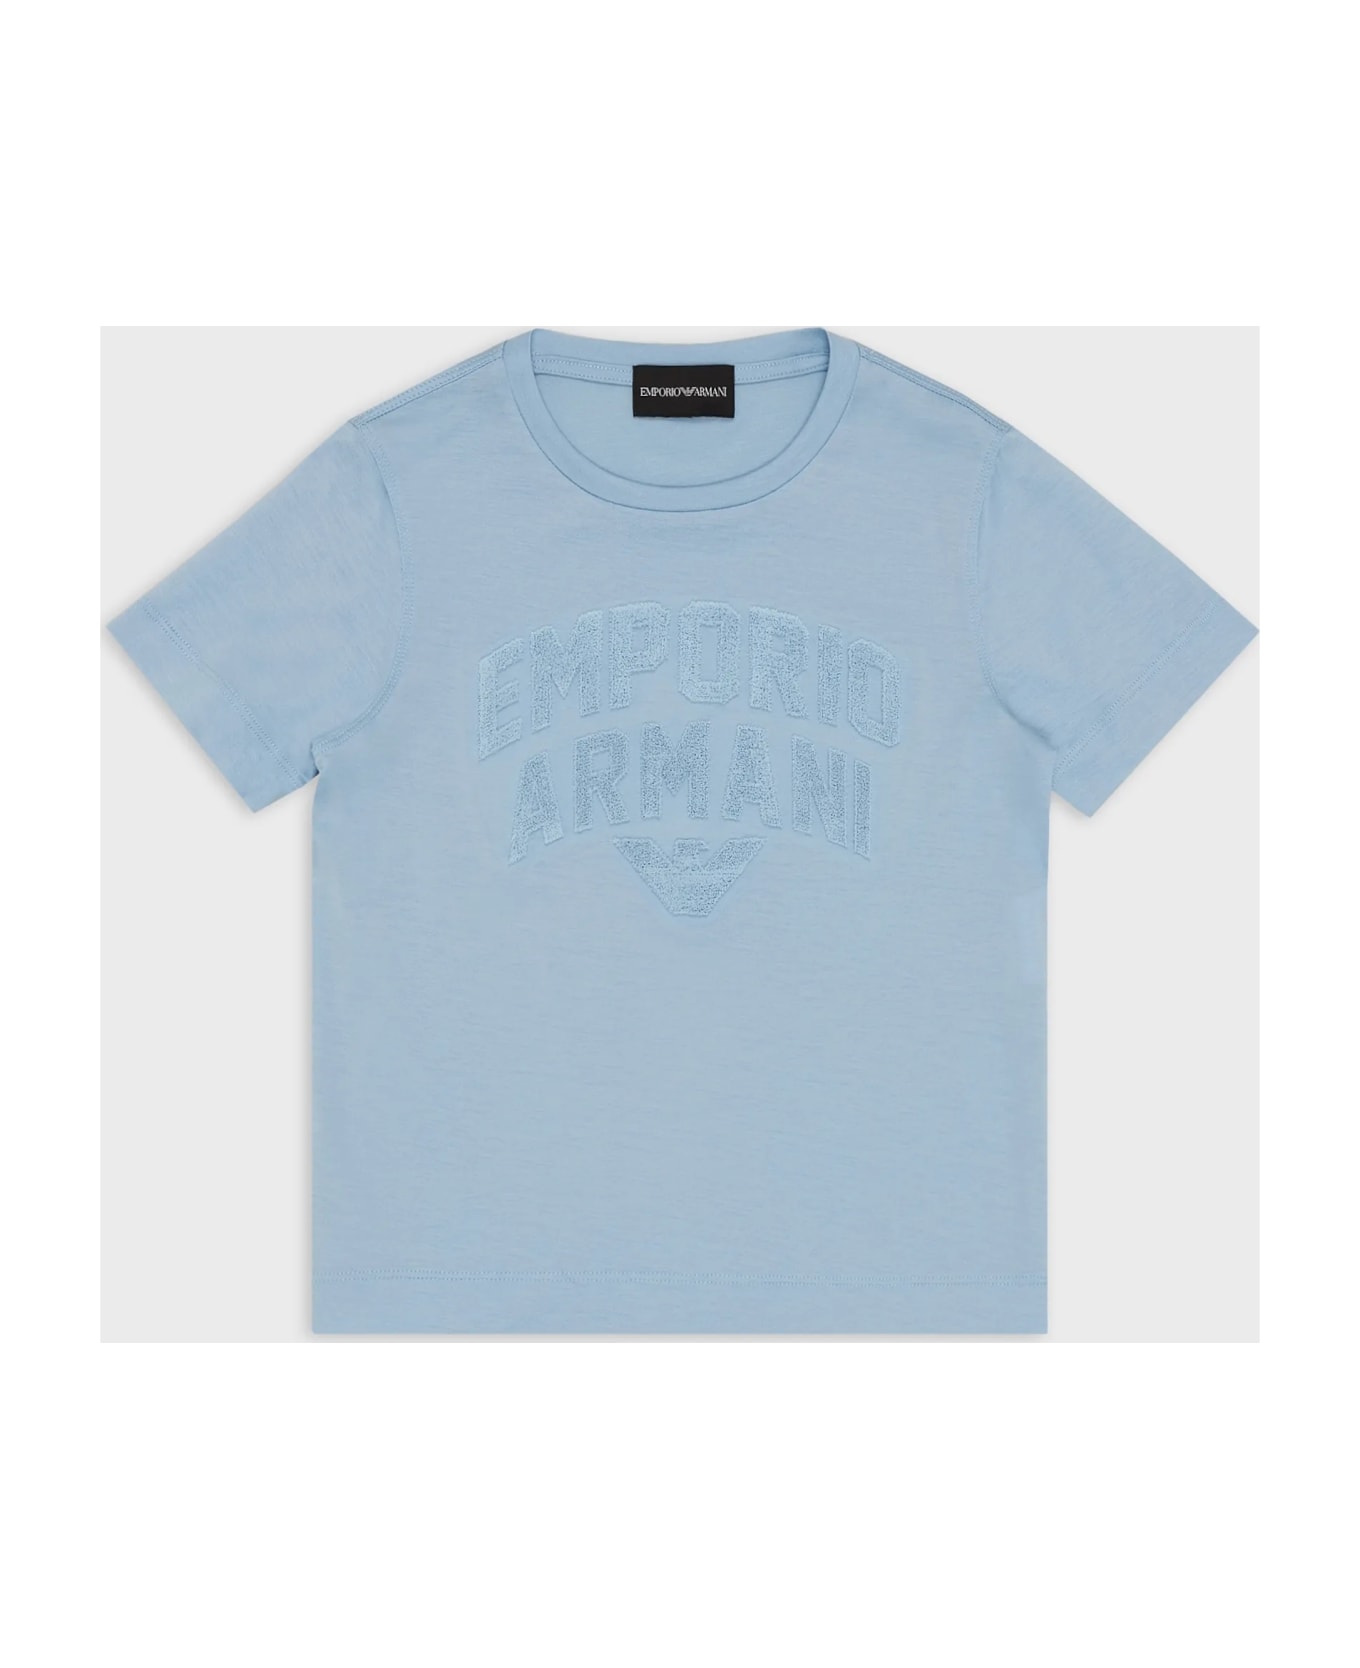 Emporio Armani T-shirt With Application - Light blue